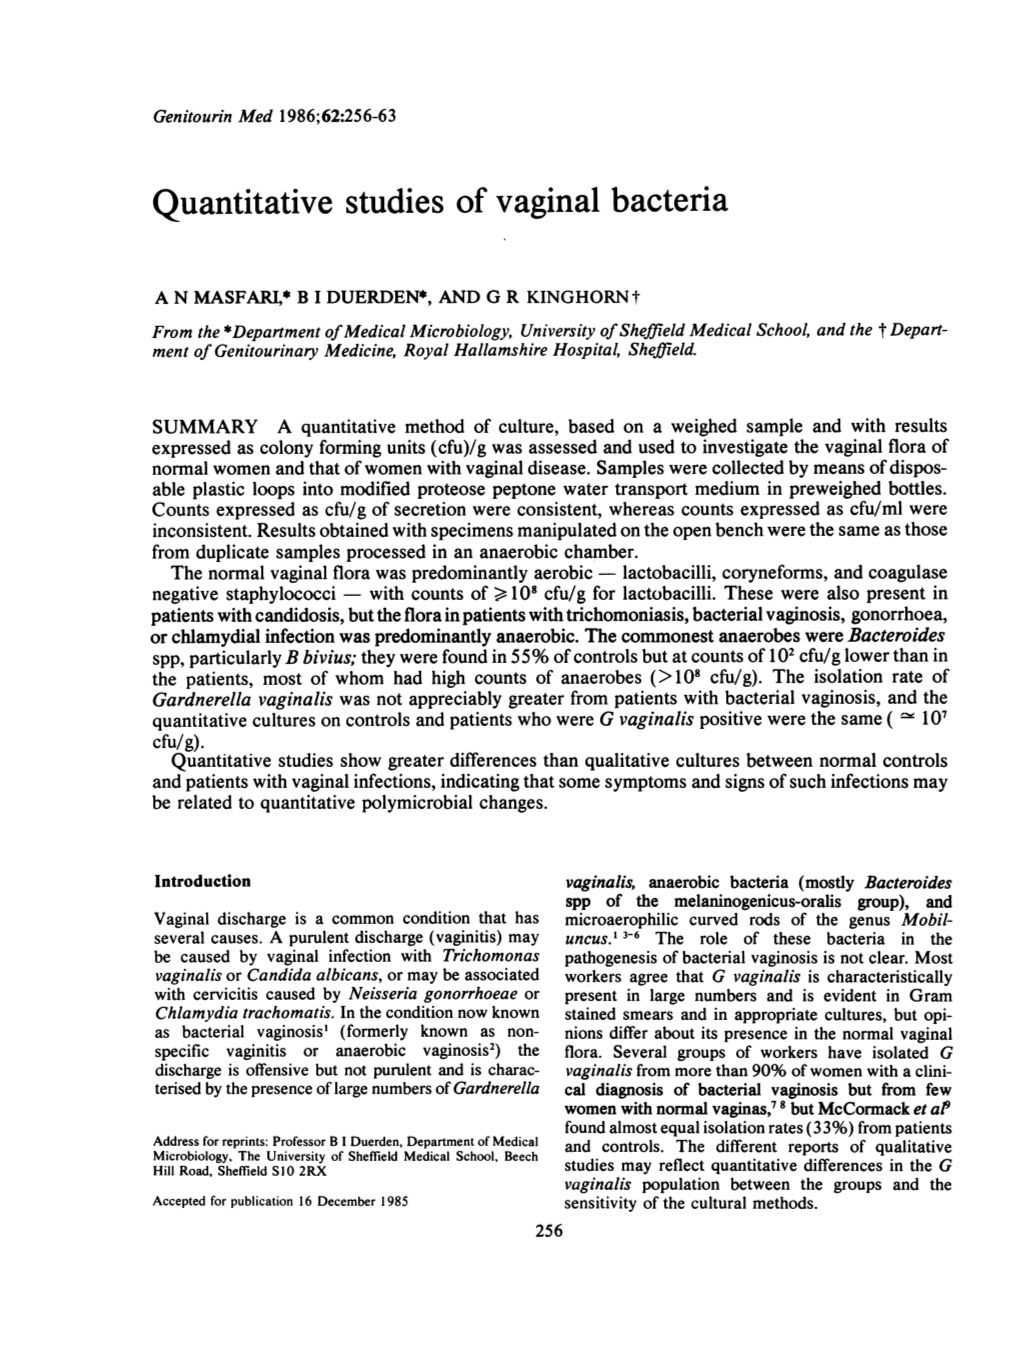 Quantitative Studies of Vaginal Bacteria